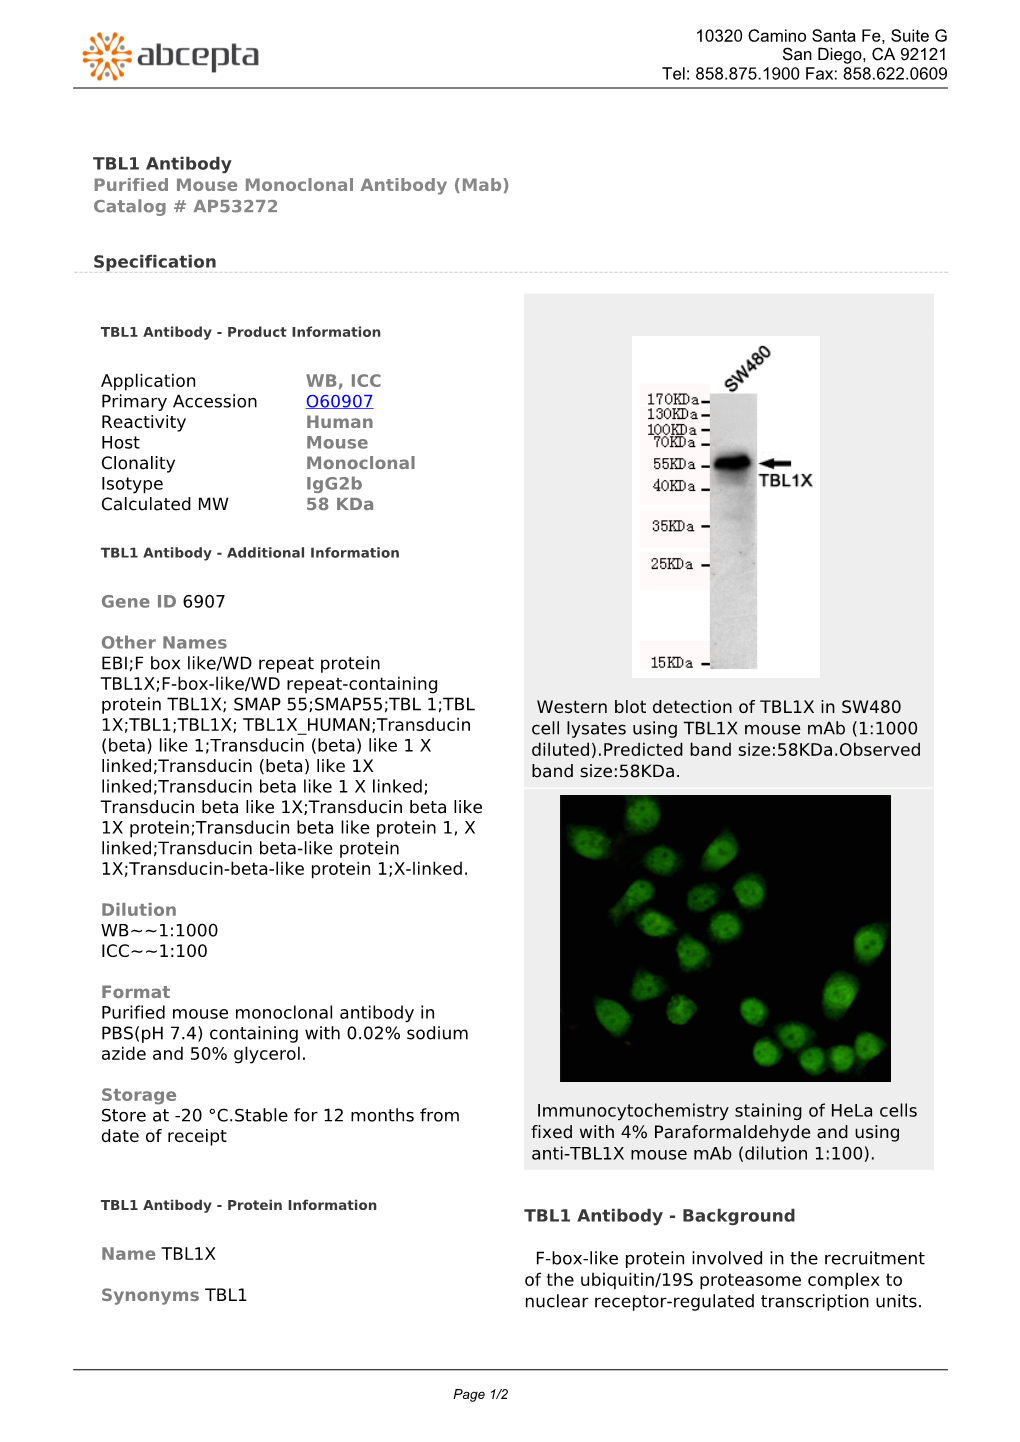 TBL1 Antibody Purified Mouse Monoclonal Antibody (Mab) Catalog # AP53272